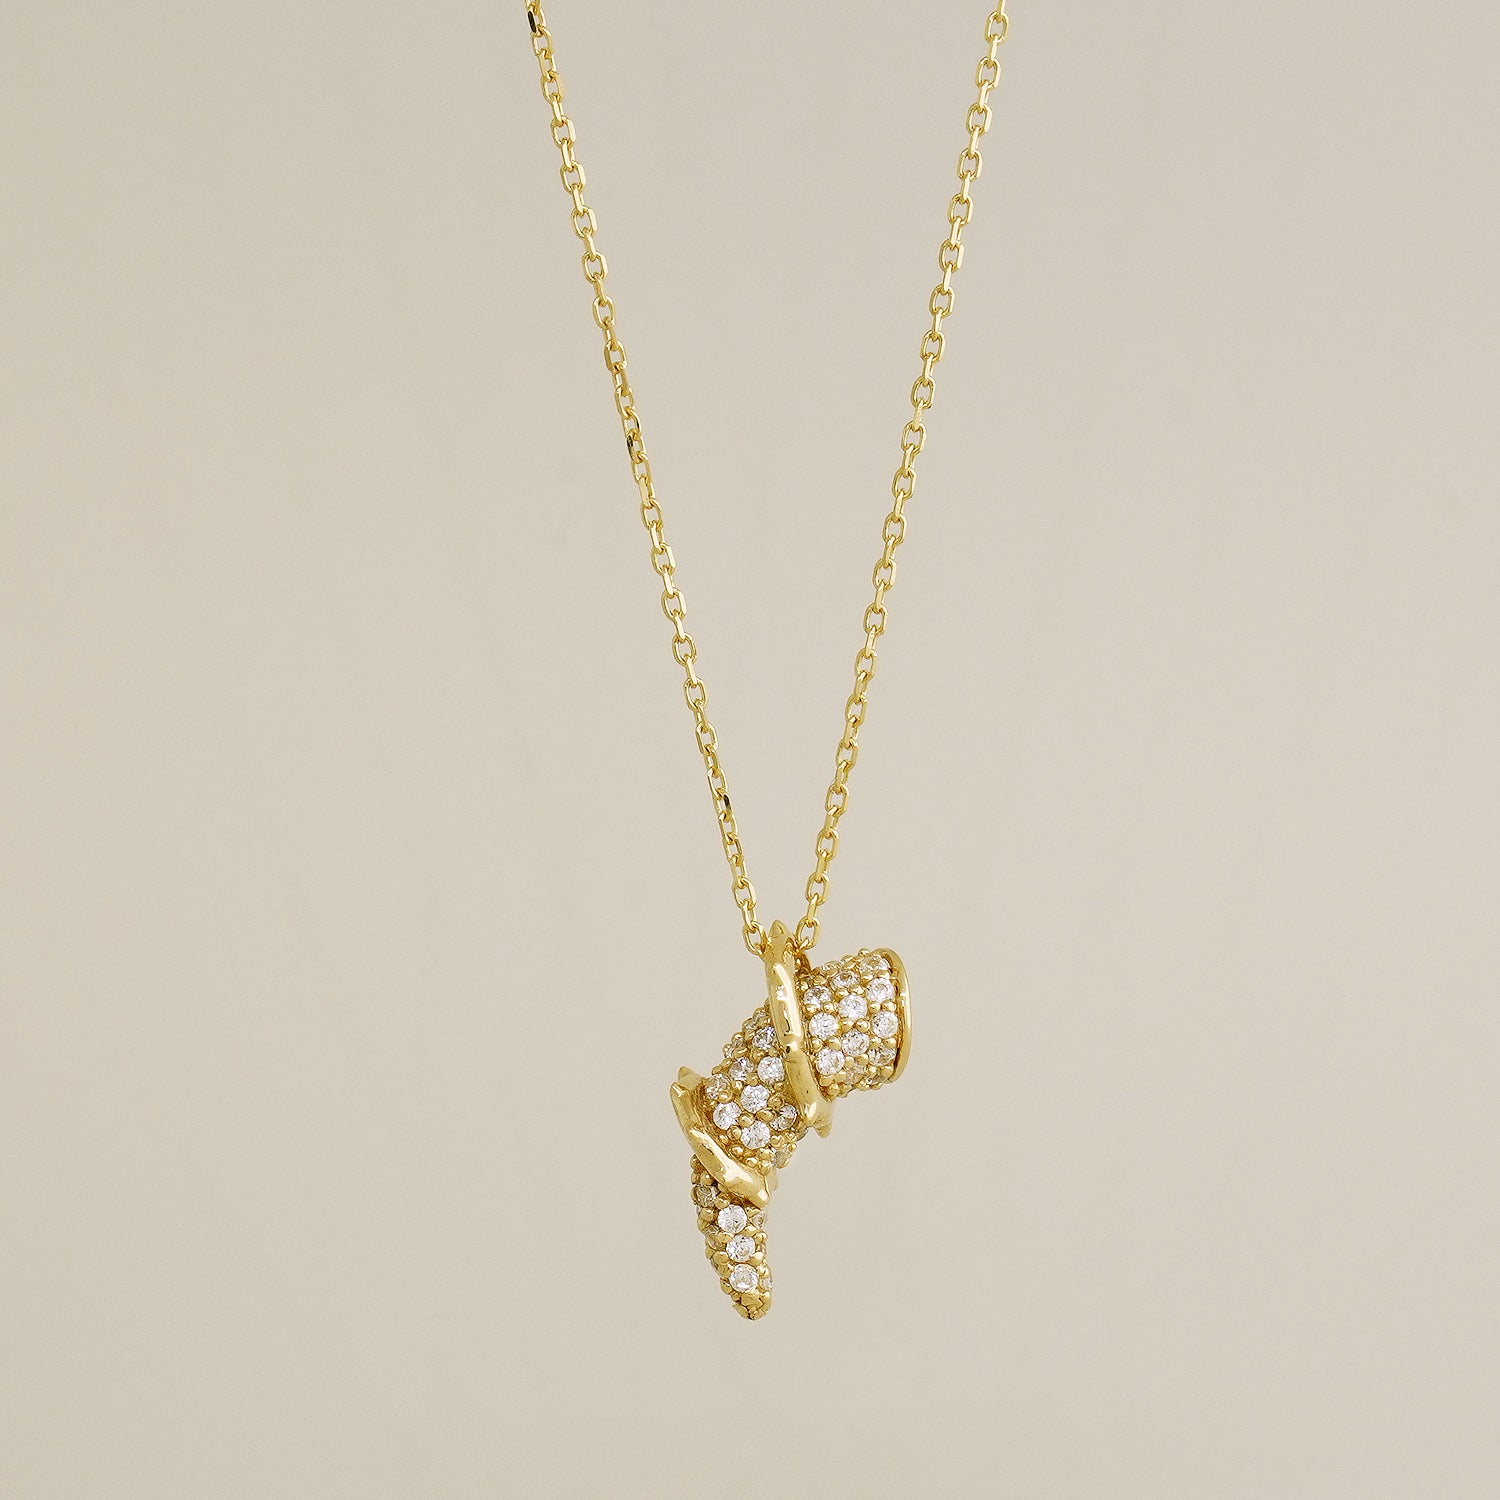 Horn Pendant Chain Necklace